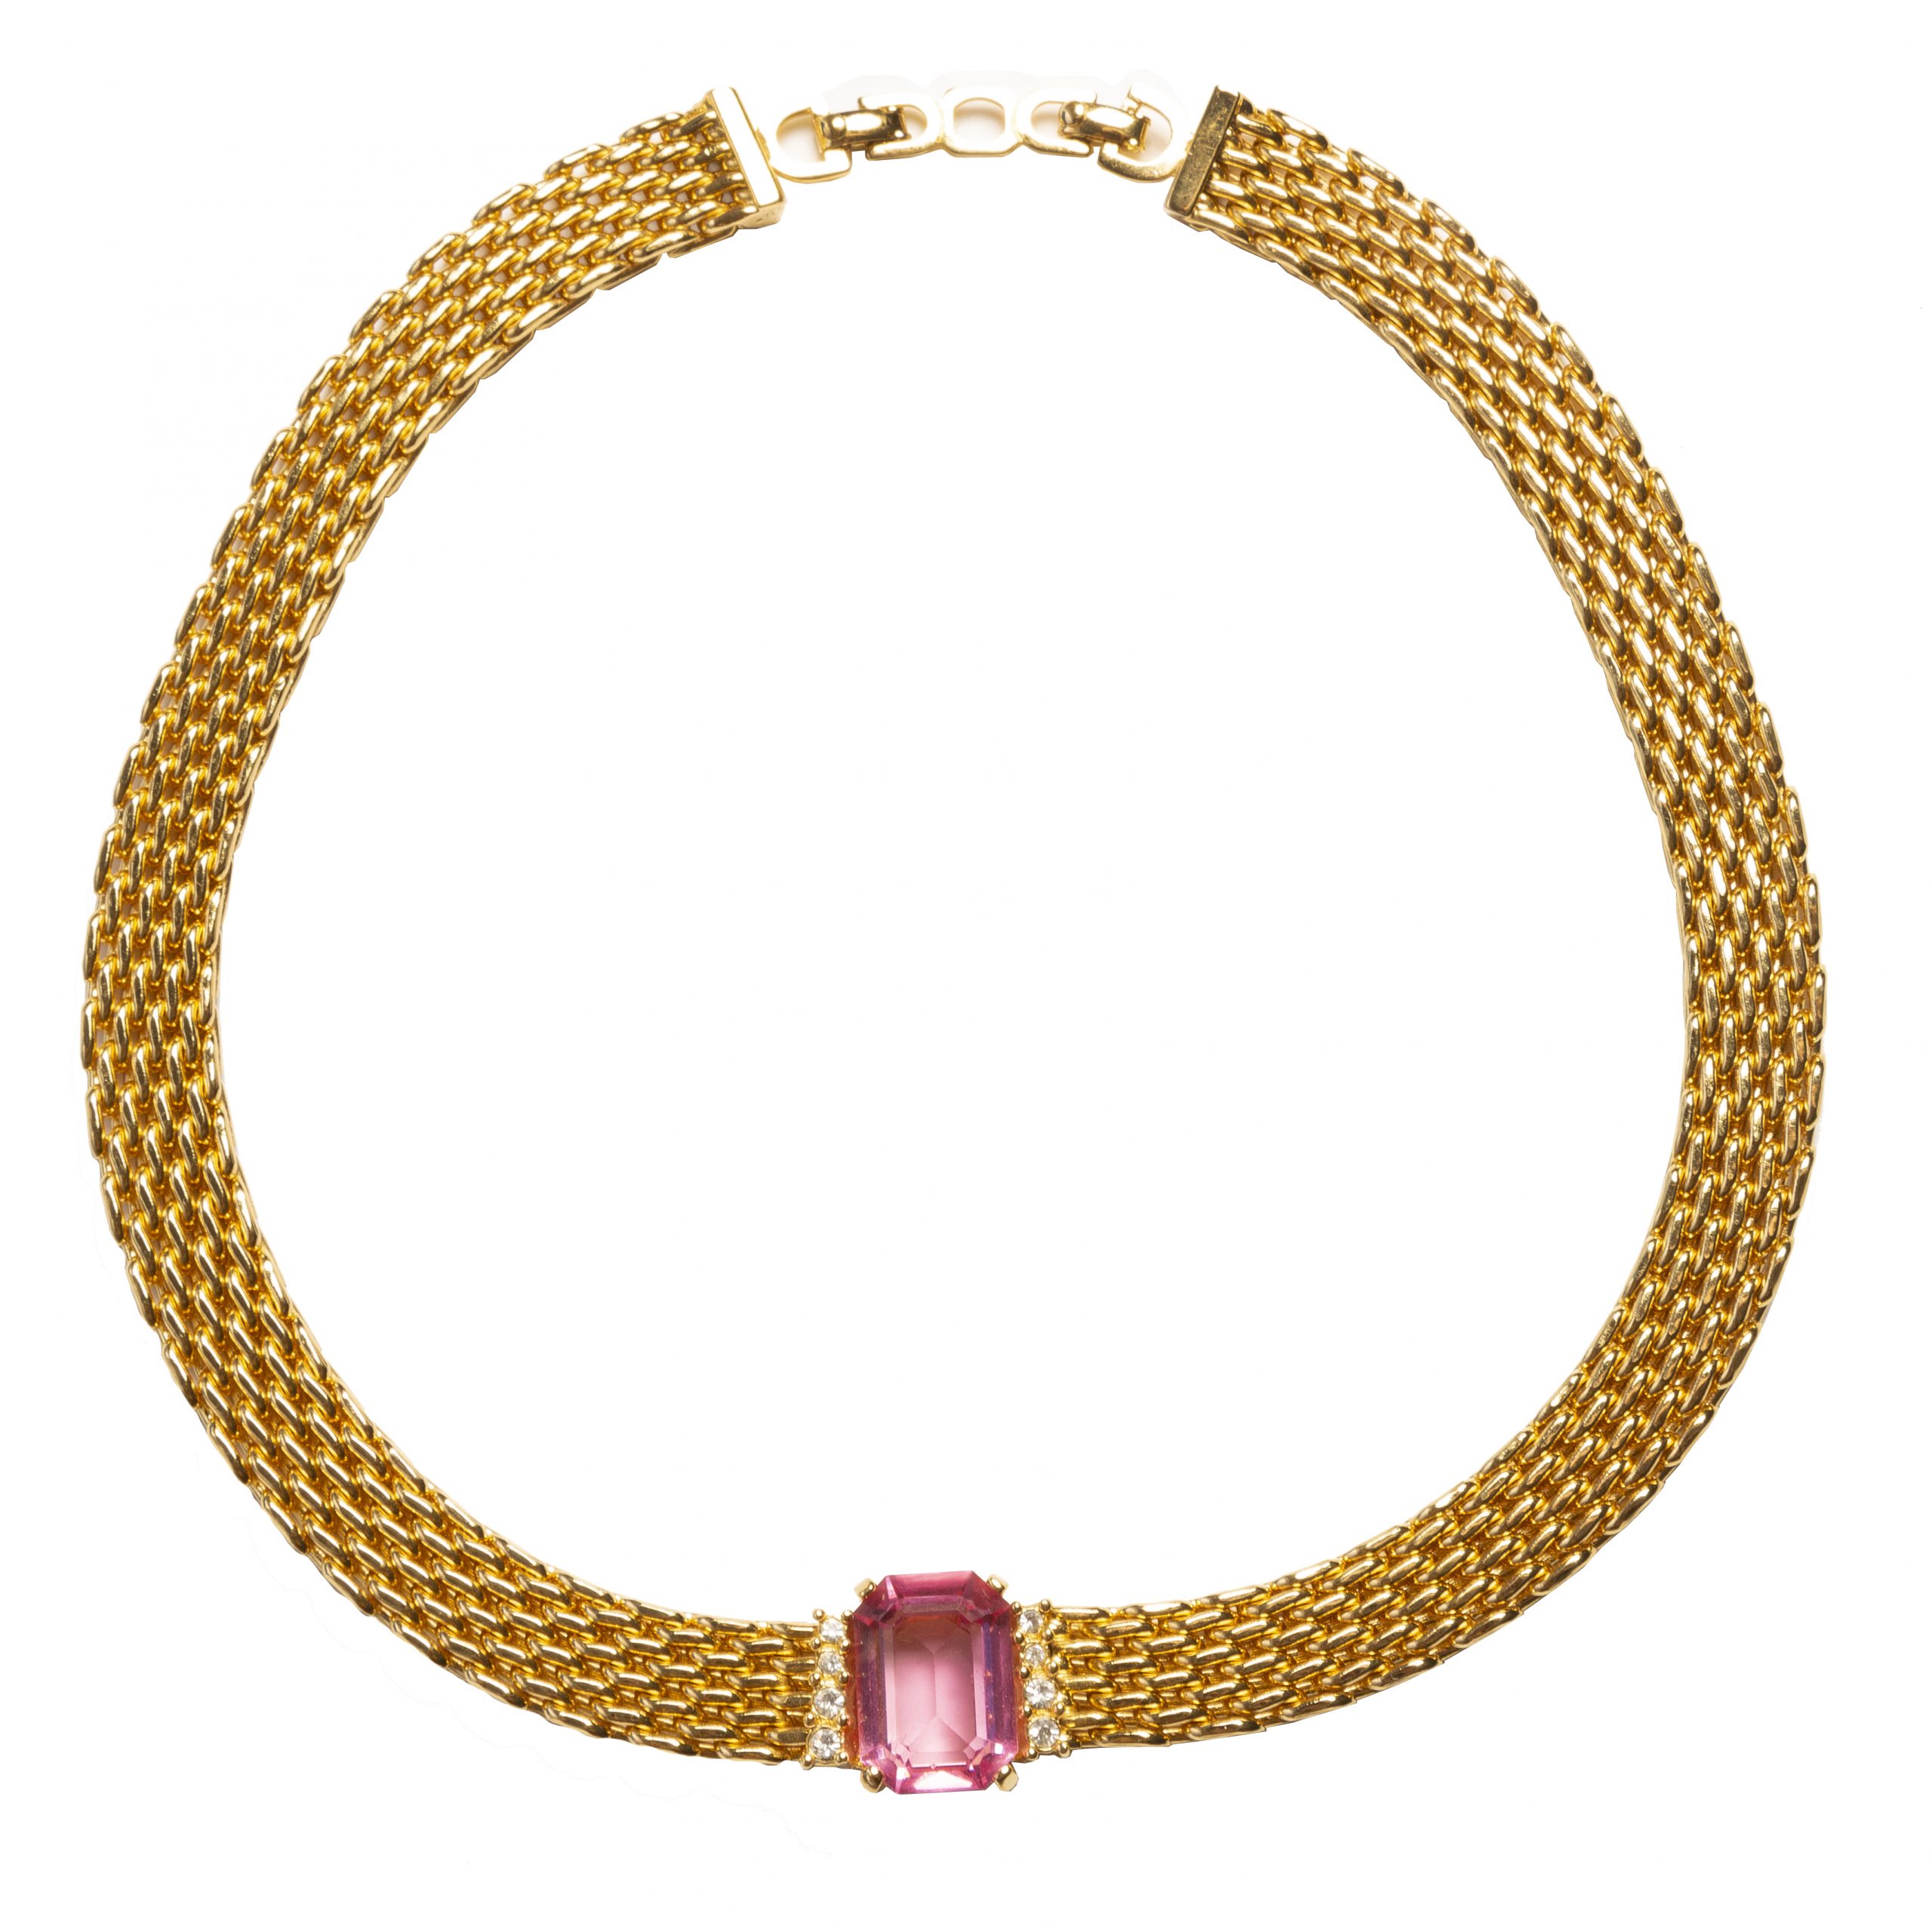 Vintage pink stone gold necklace